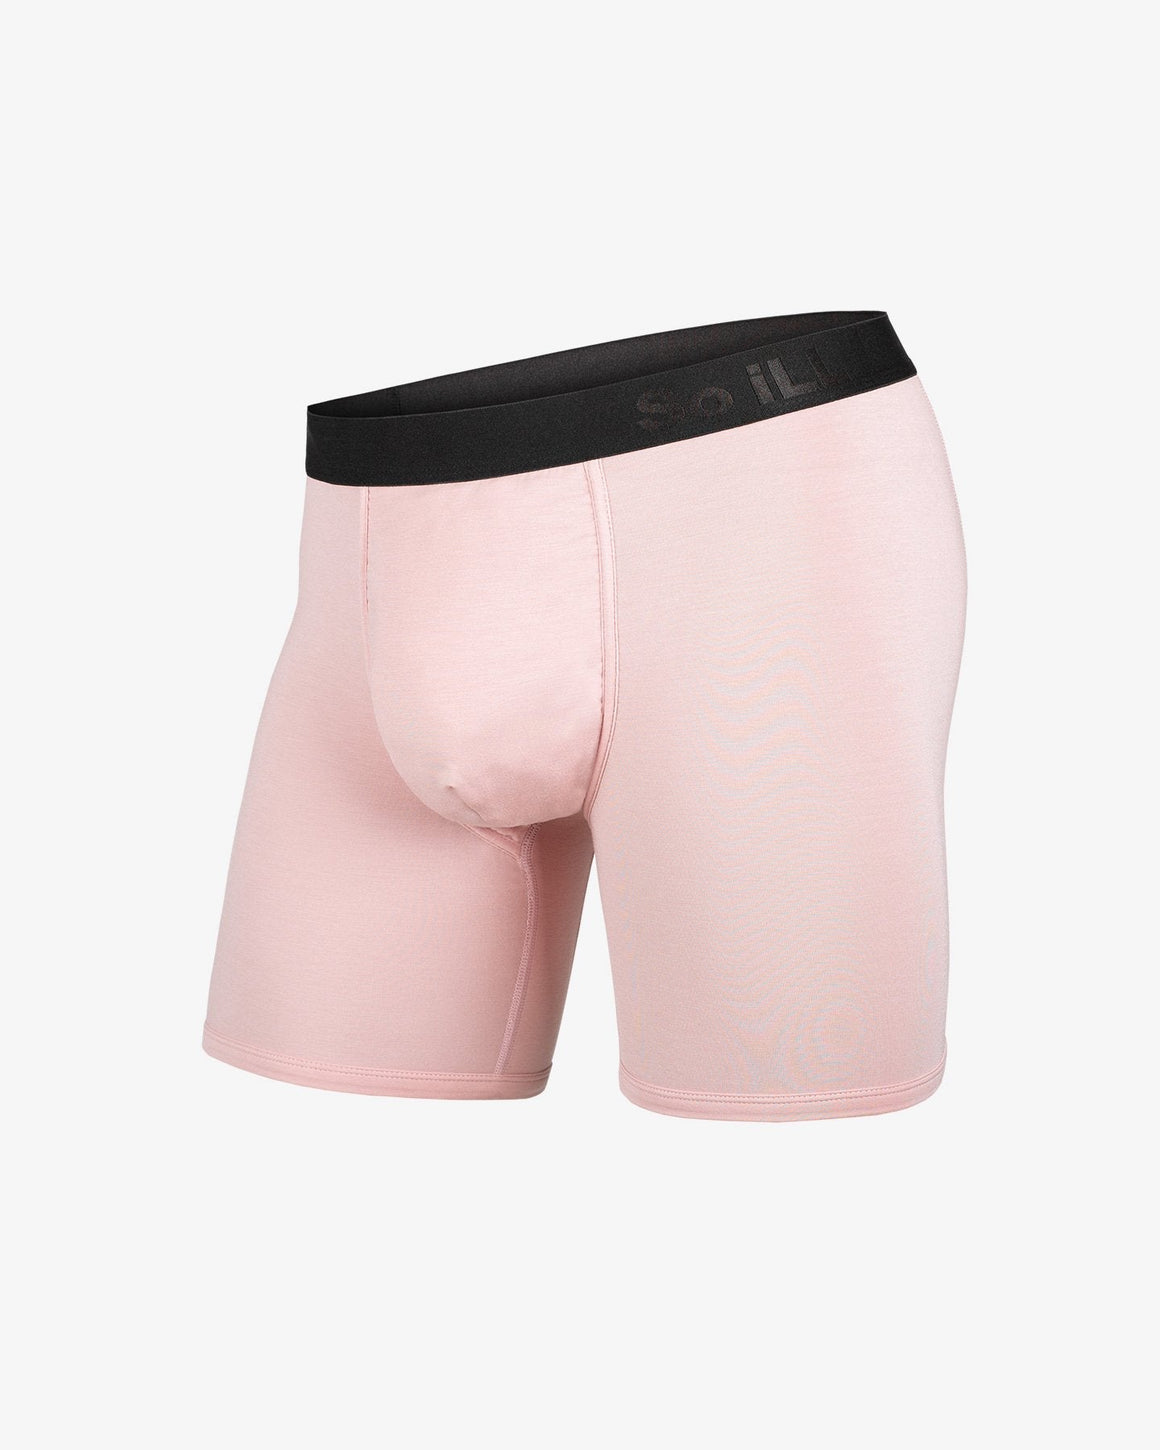 Boxer Briefs Kalix Bananas Pink Pink  DEDICATED Mens Underwear ⋆ Nana van  der Aa